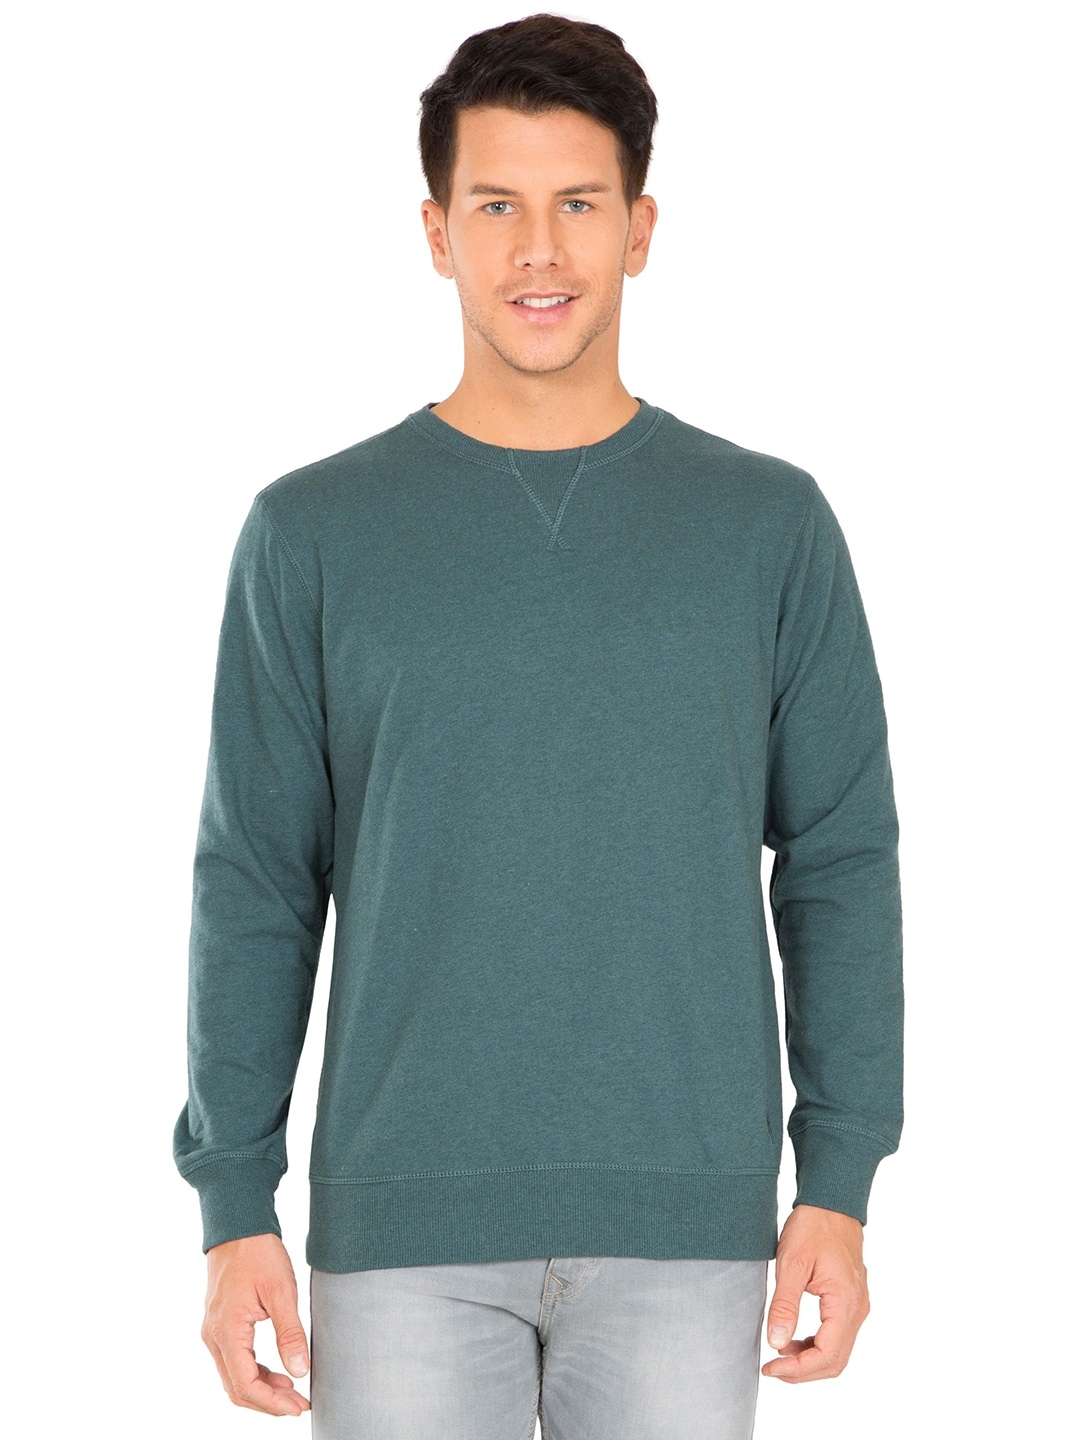 Buy Jockey Men Teal Green Solid Sweatshirt - Sweatshirts for Men ...